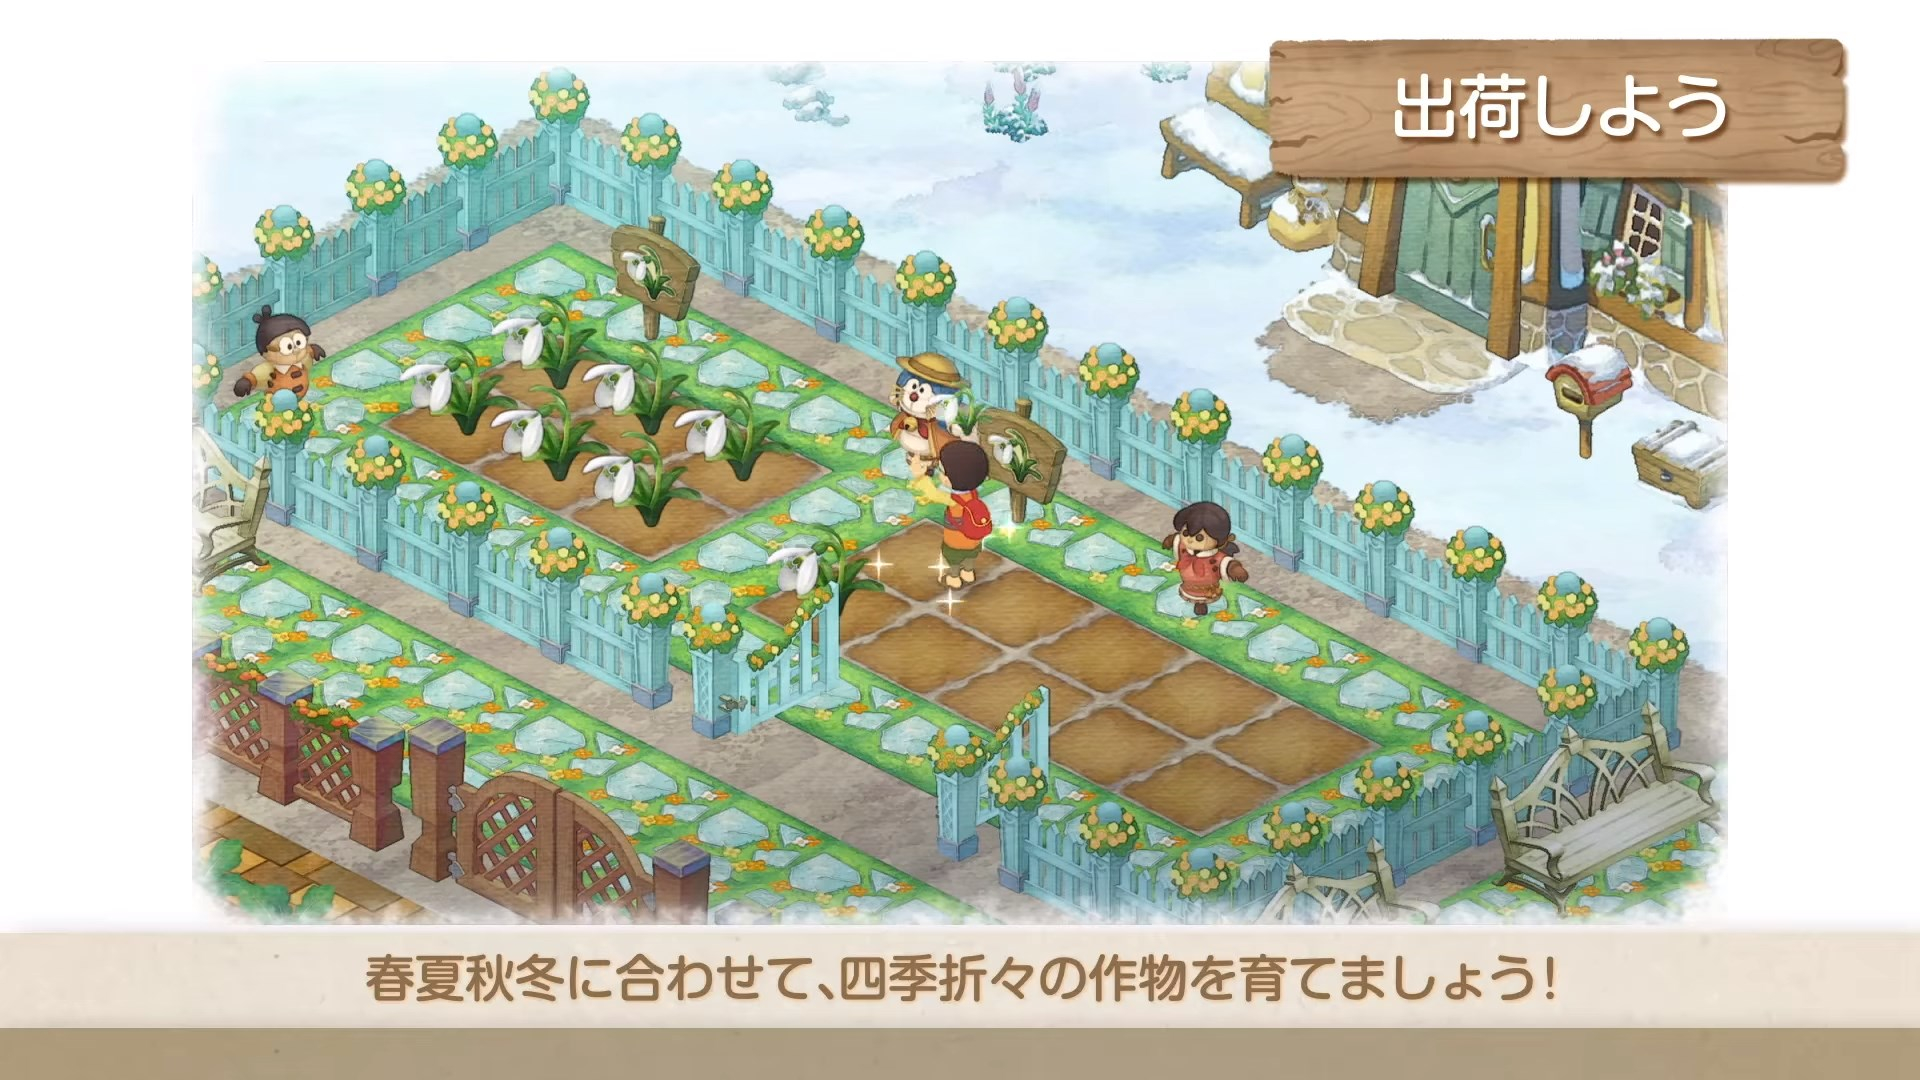 Doraemon Story of Seasons Newest Trailer Details Farming System; Demo